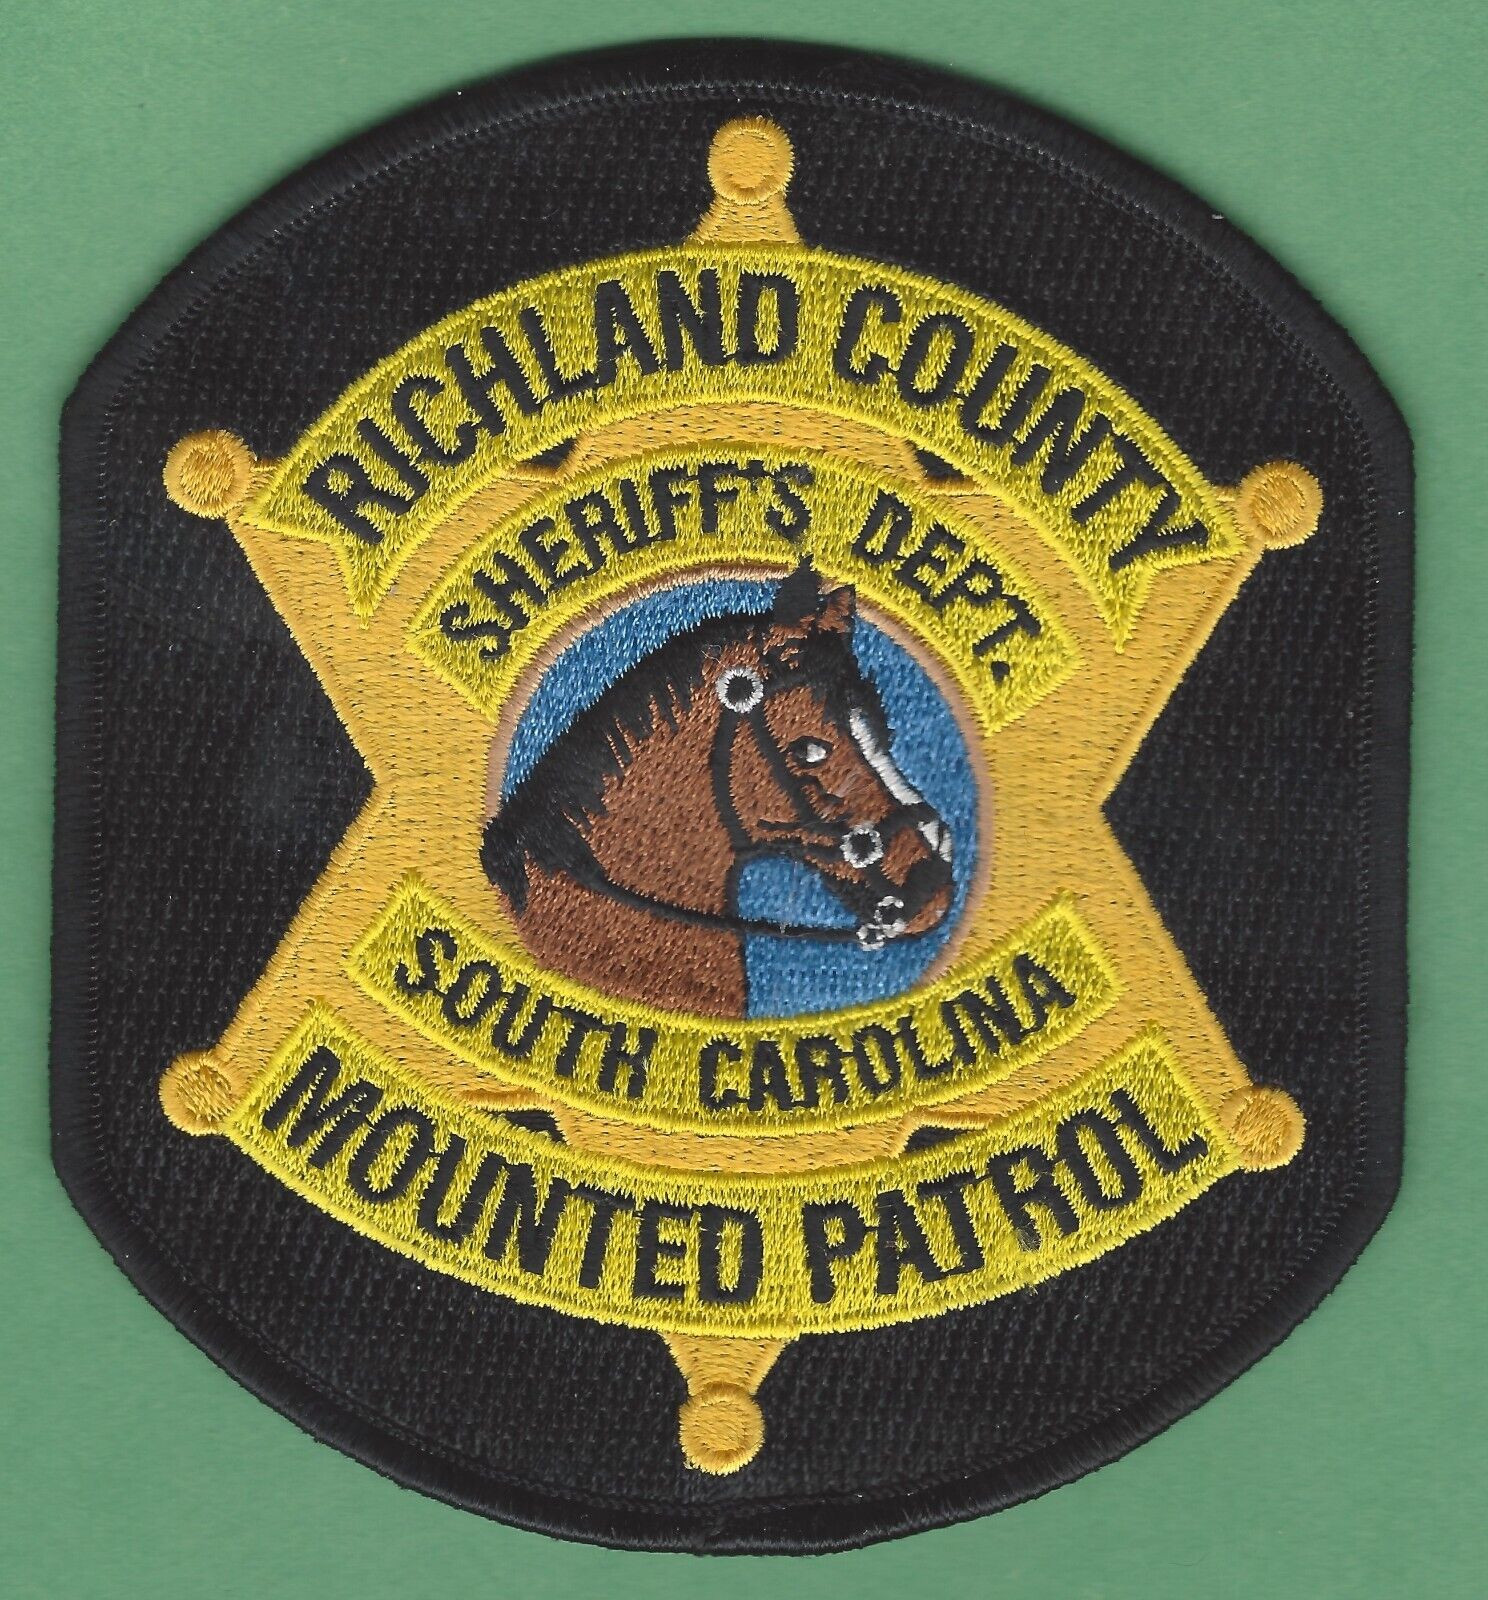 RICHLAND COUNTY SOUTH CAROLINA SHERIFF MOUNTED PATROL SHOULDER PATCH